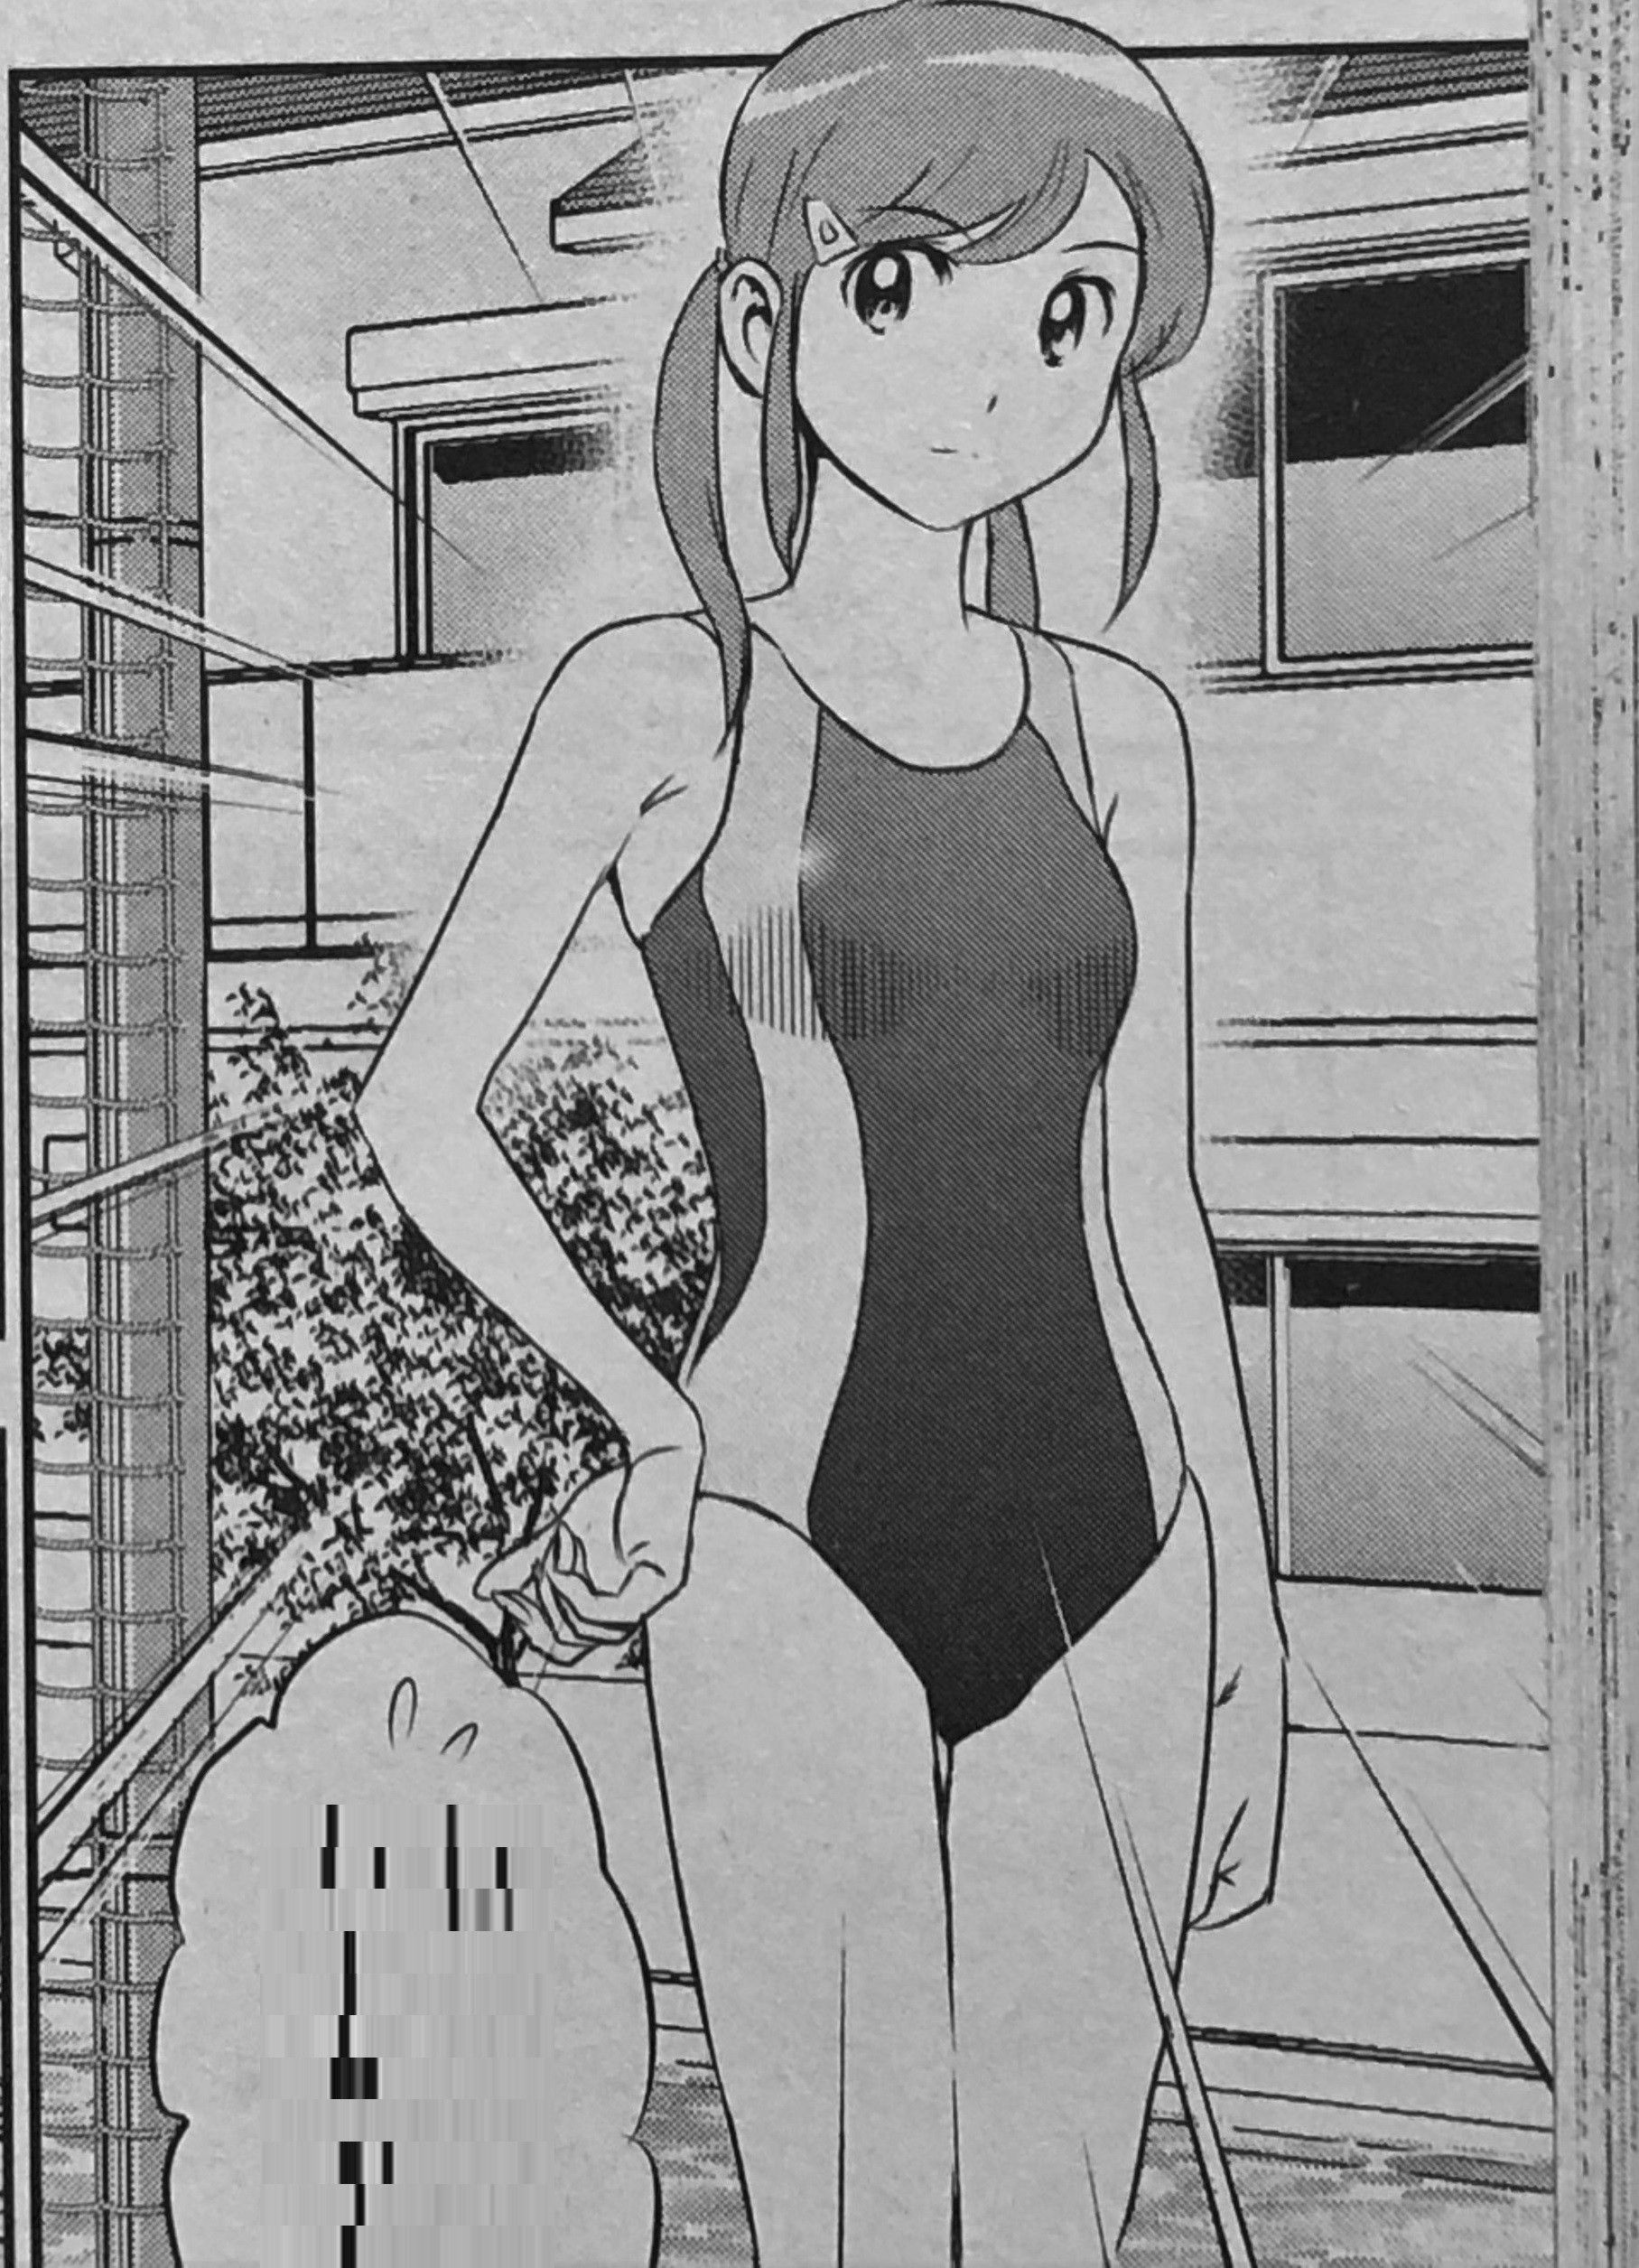 [Image] Name the scene that escapes the most in MAJOR The amateur "Ryoko-chan's Panchira" is a "ke... Huh?" Idiot "Izumi no Sukumizu" 13